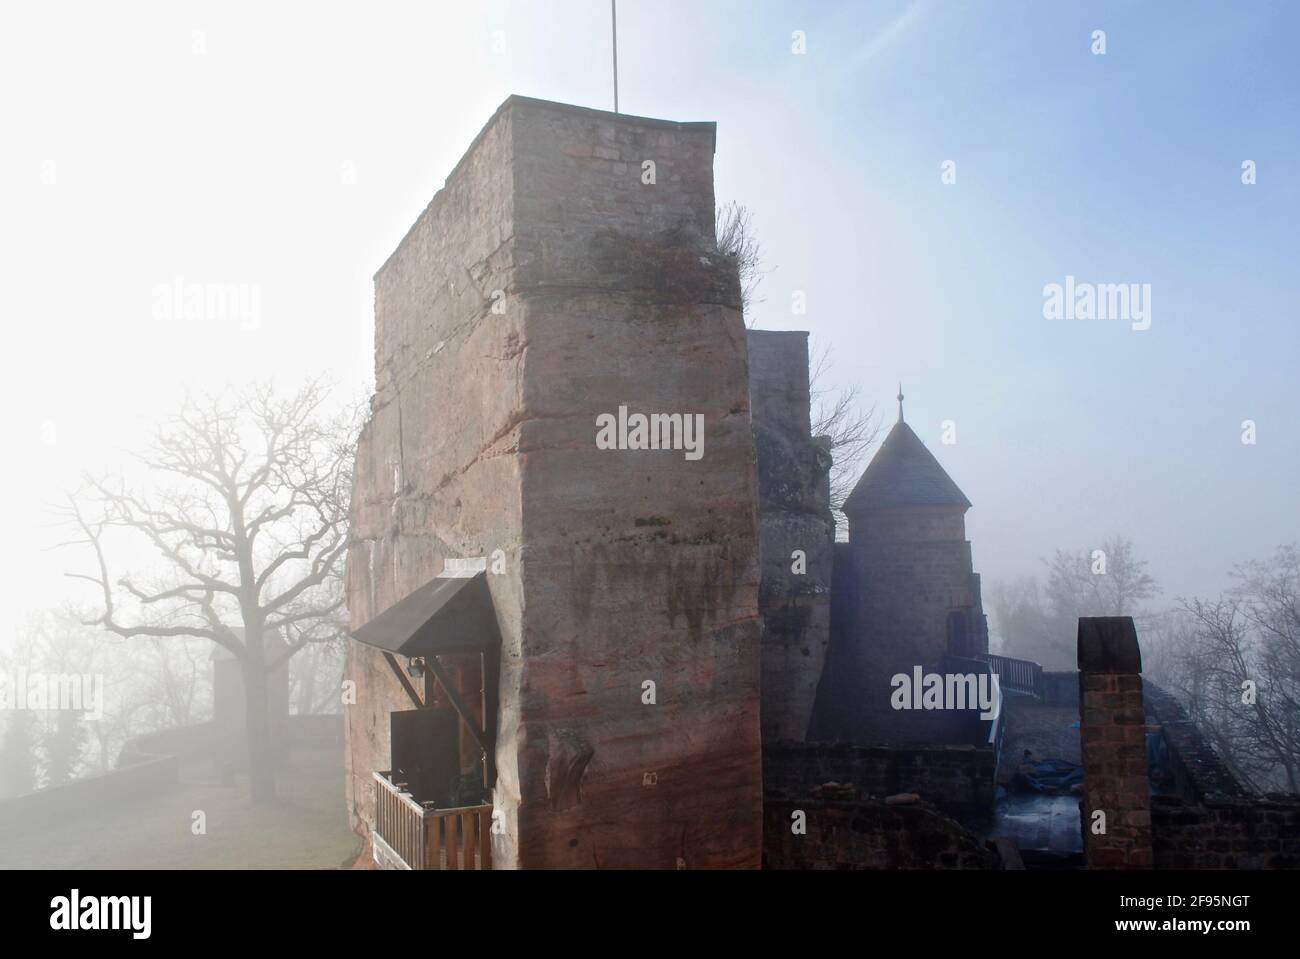 LANDSTUHL, GERMANY: Burg Nanstein (Nanstein Castle) in Landstuhl, Germany on a foggy, misty morning. A wooden balcony on a stone wall. Stock Photo